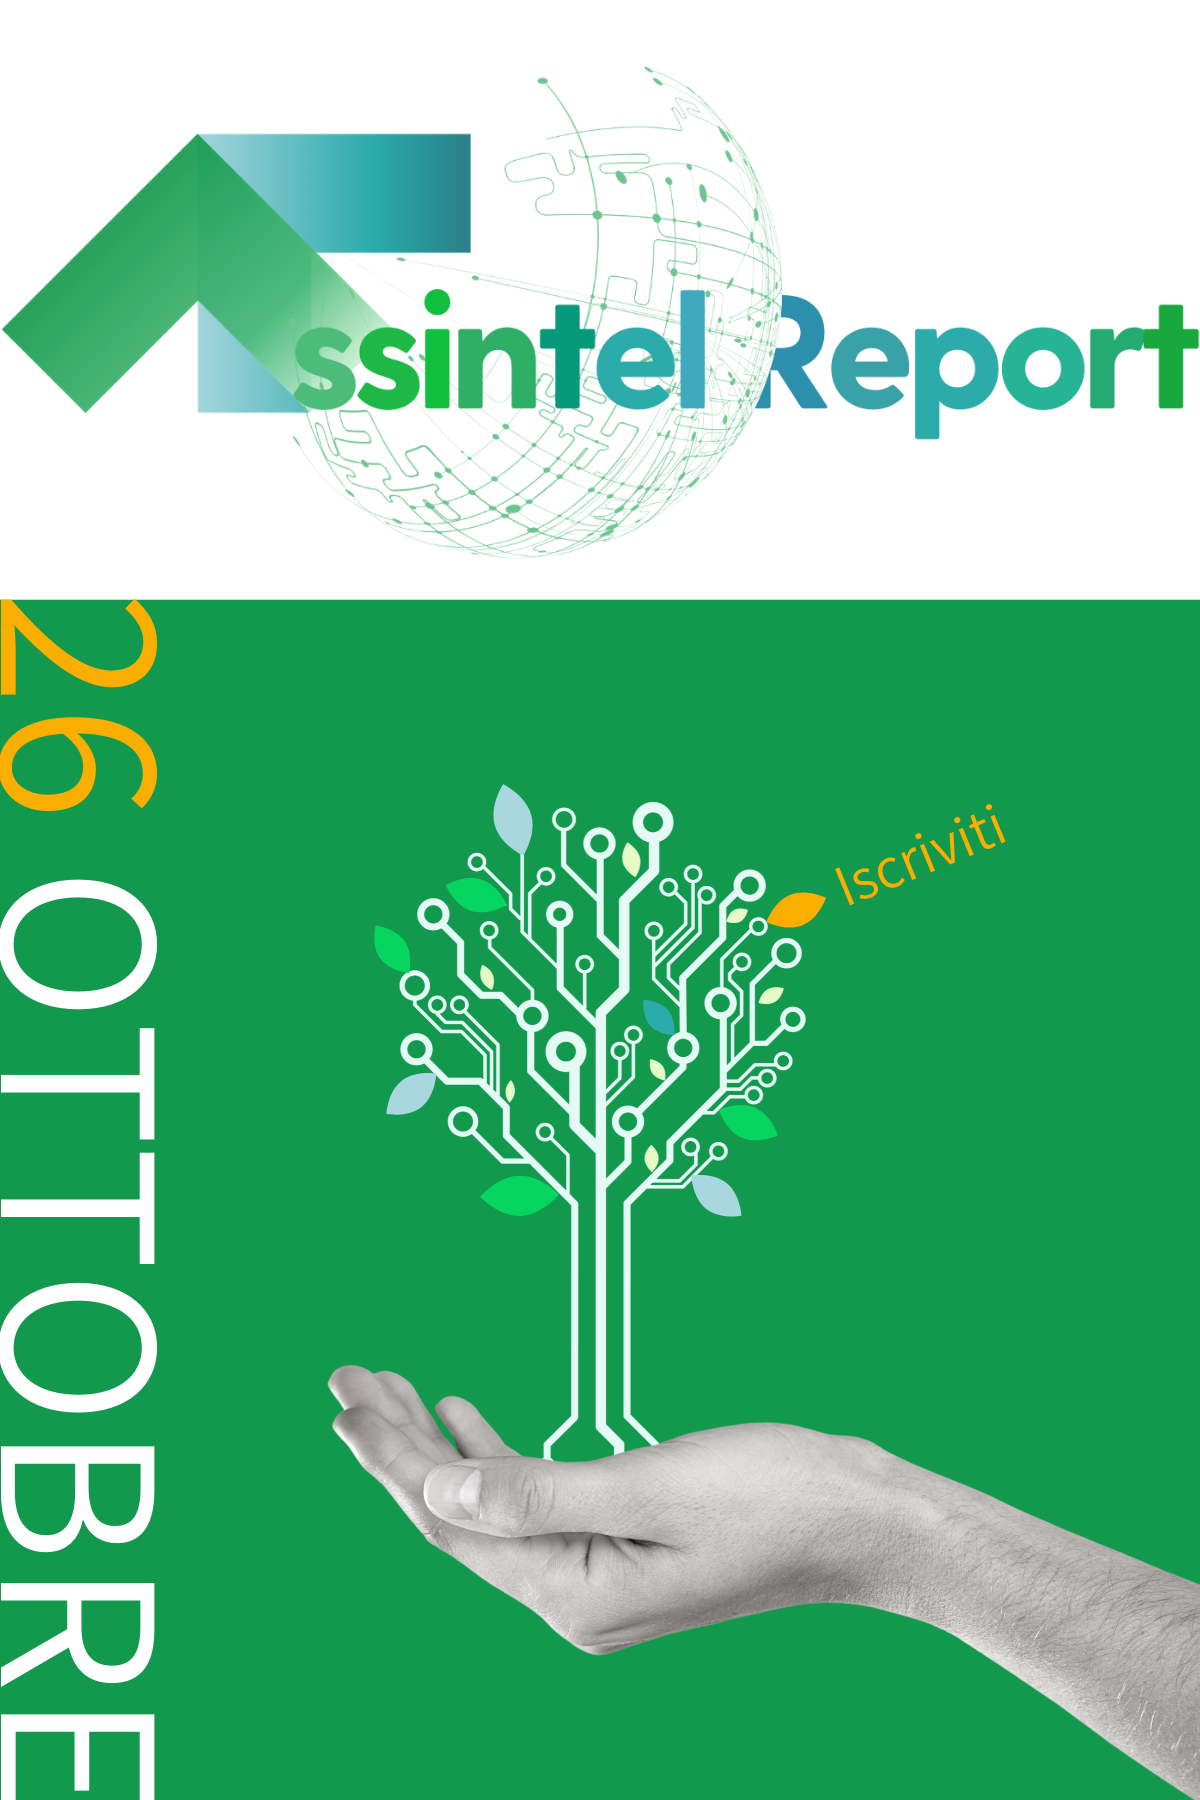 Assintel Report